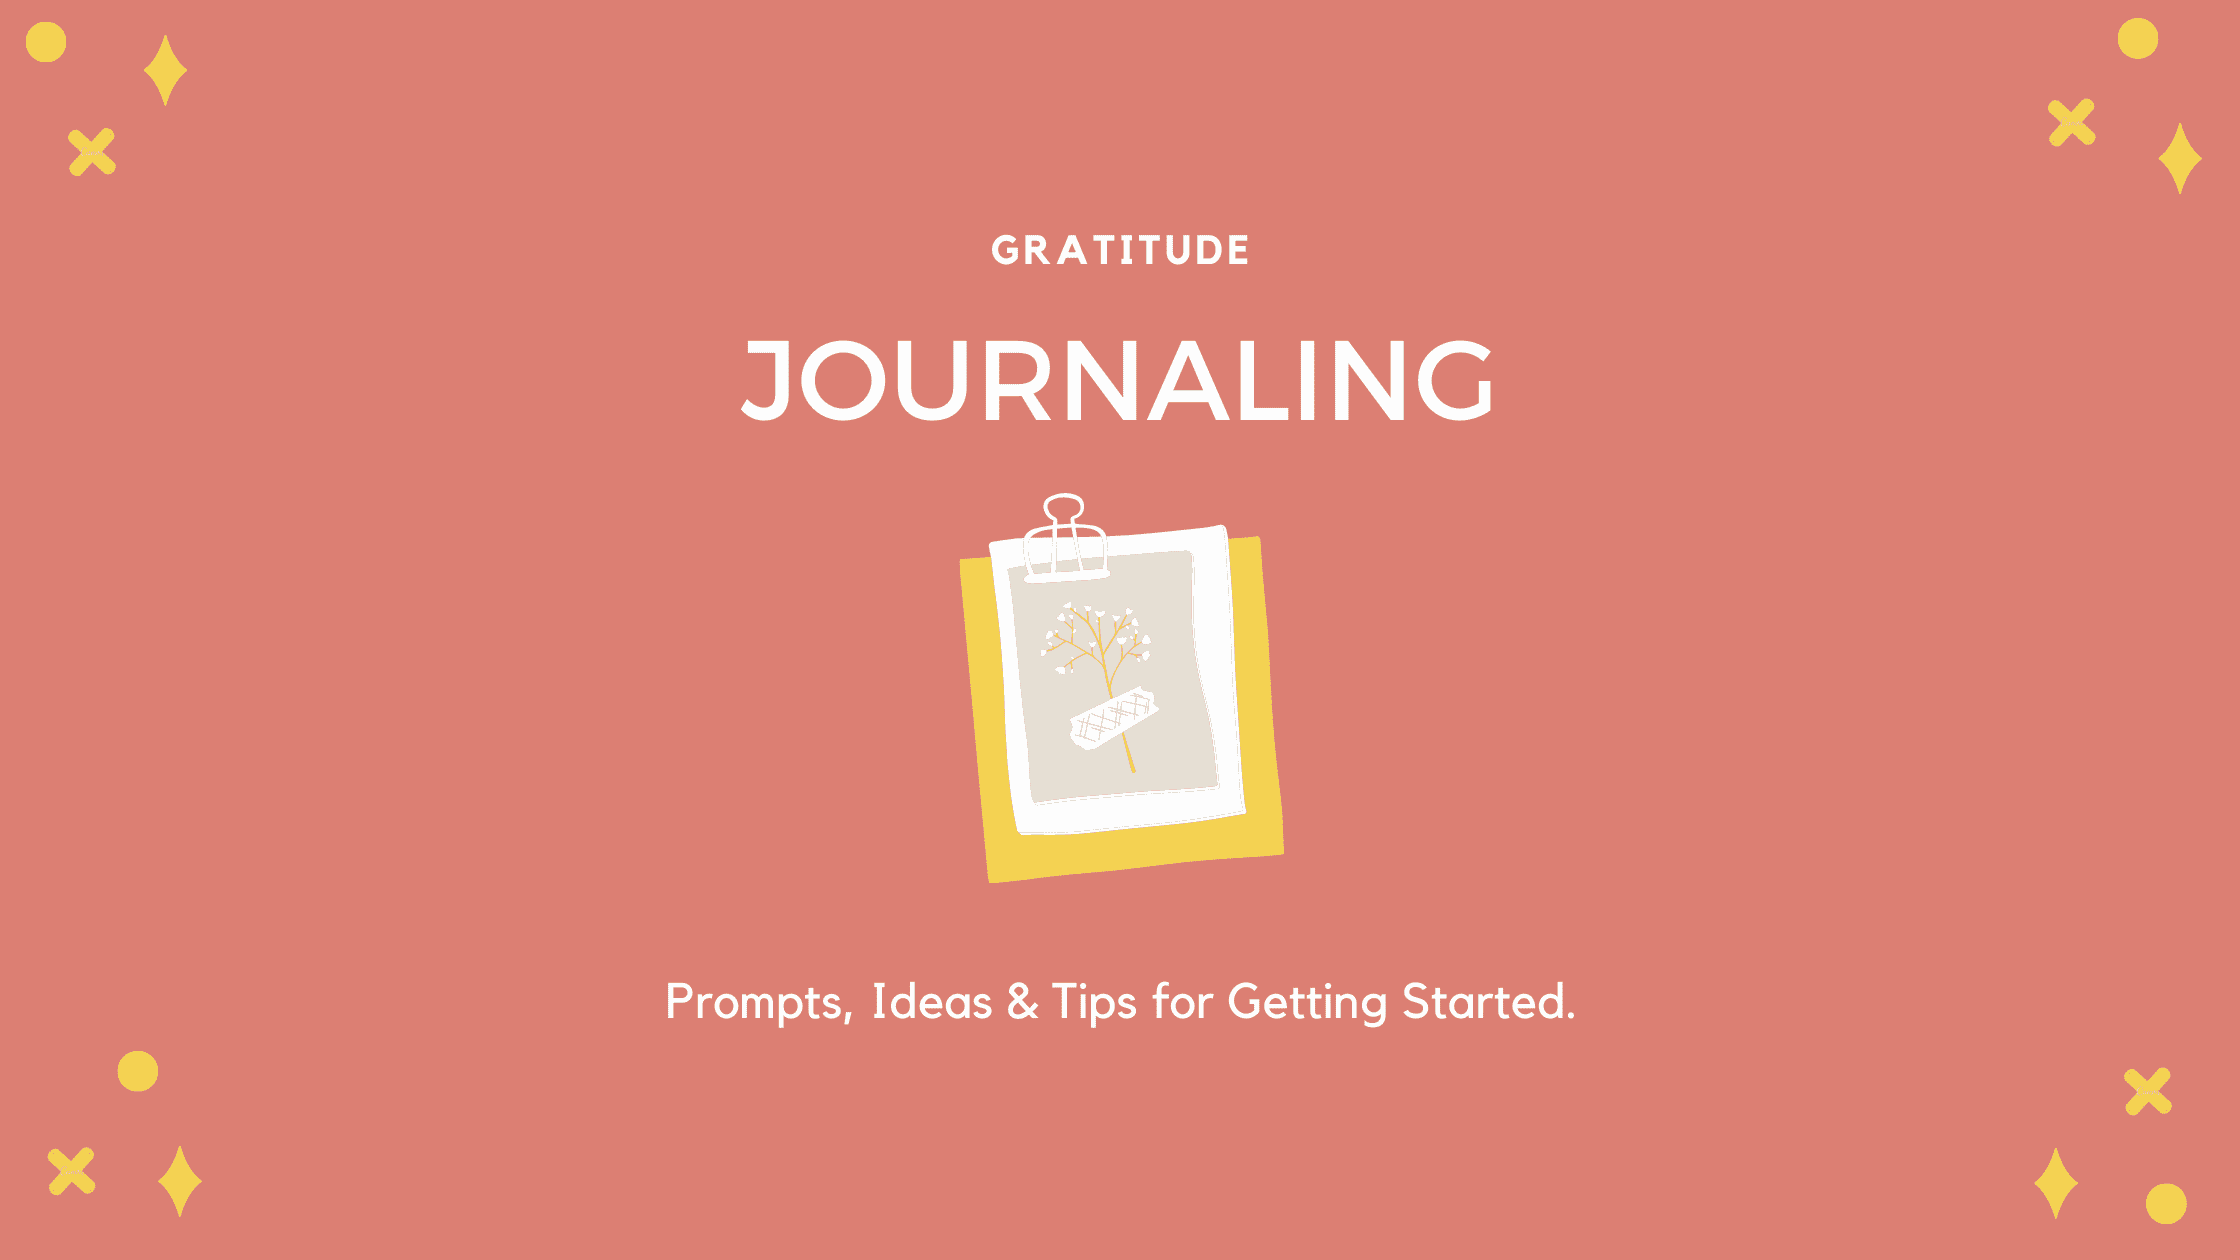 Gratitude journal app